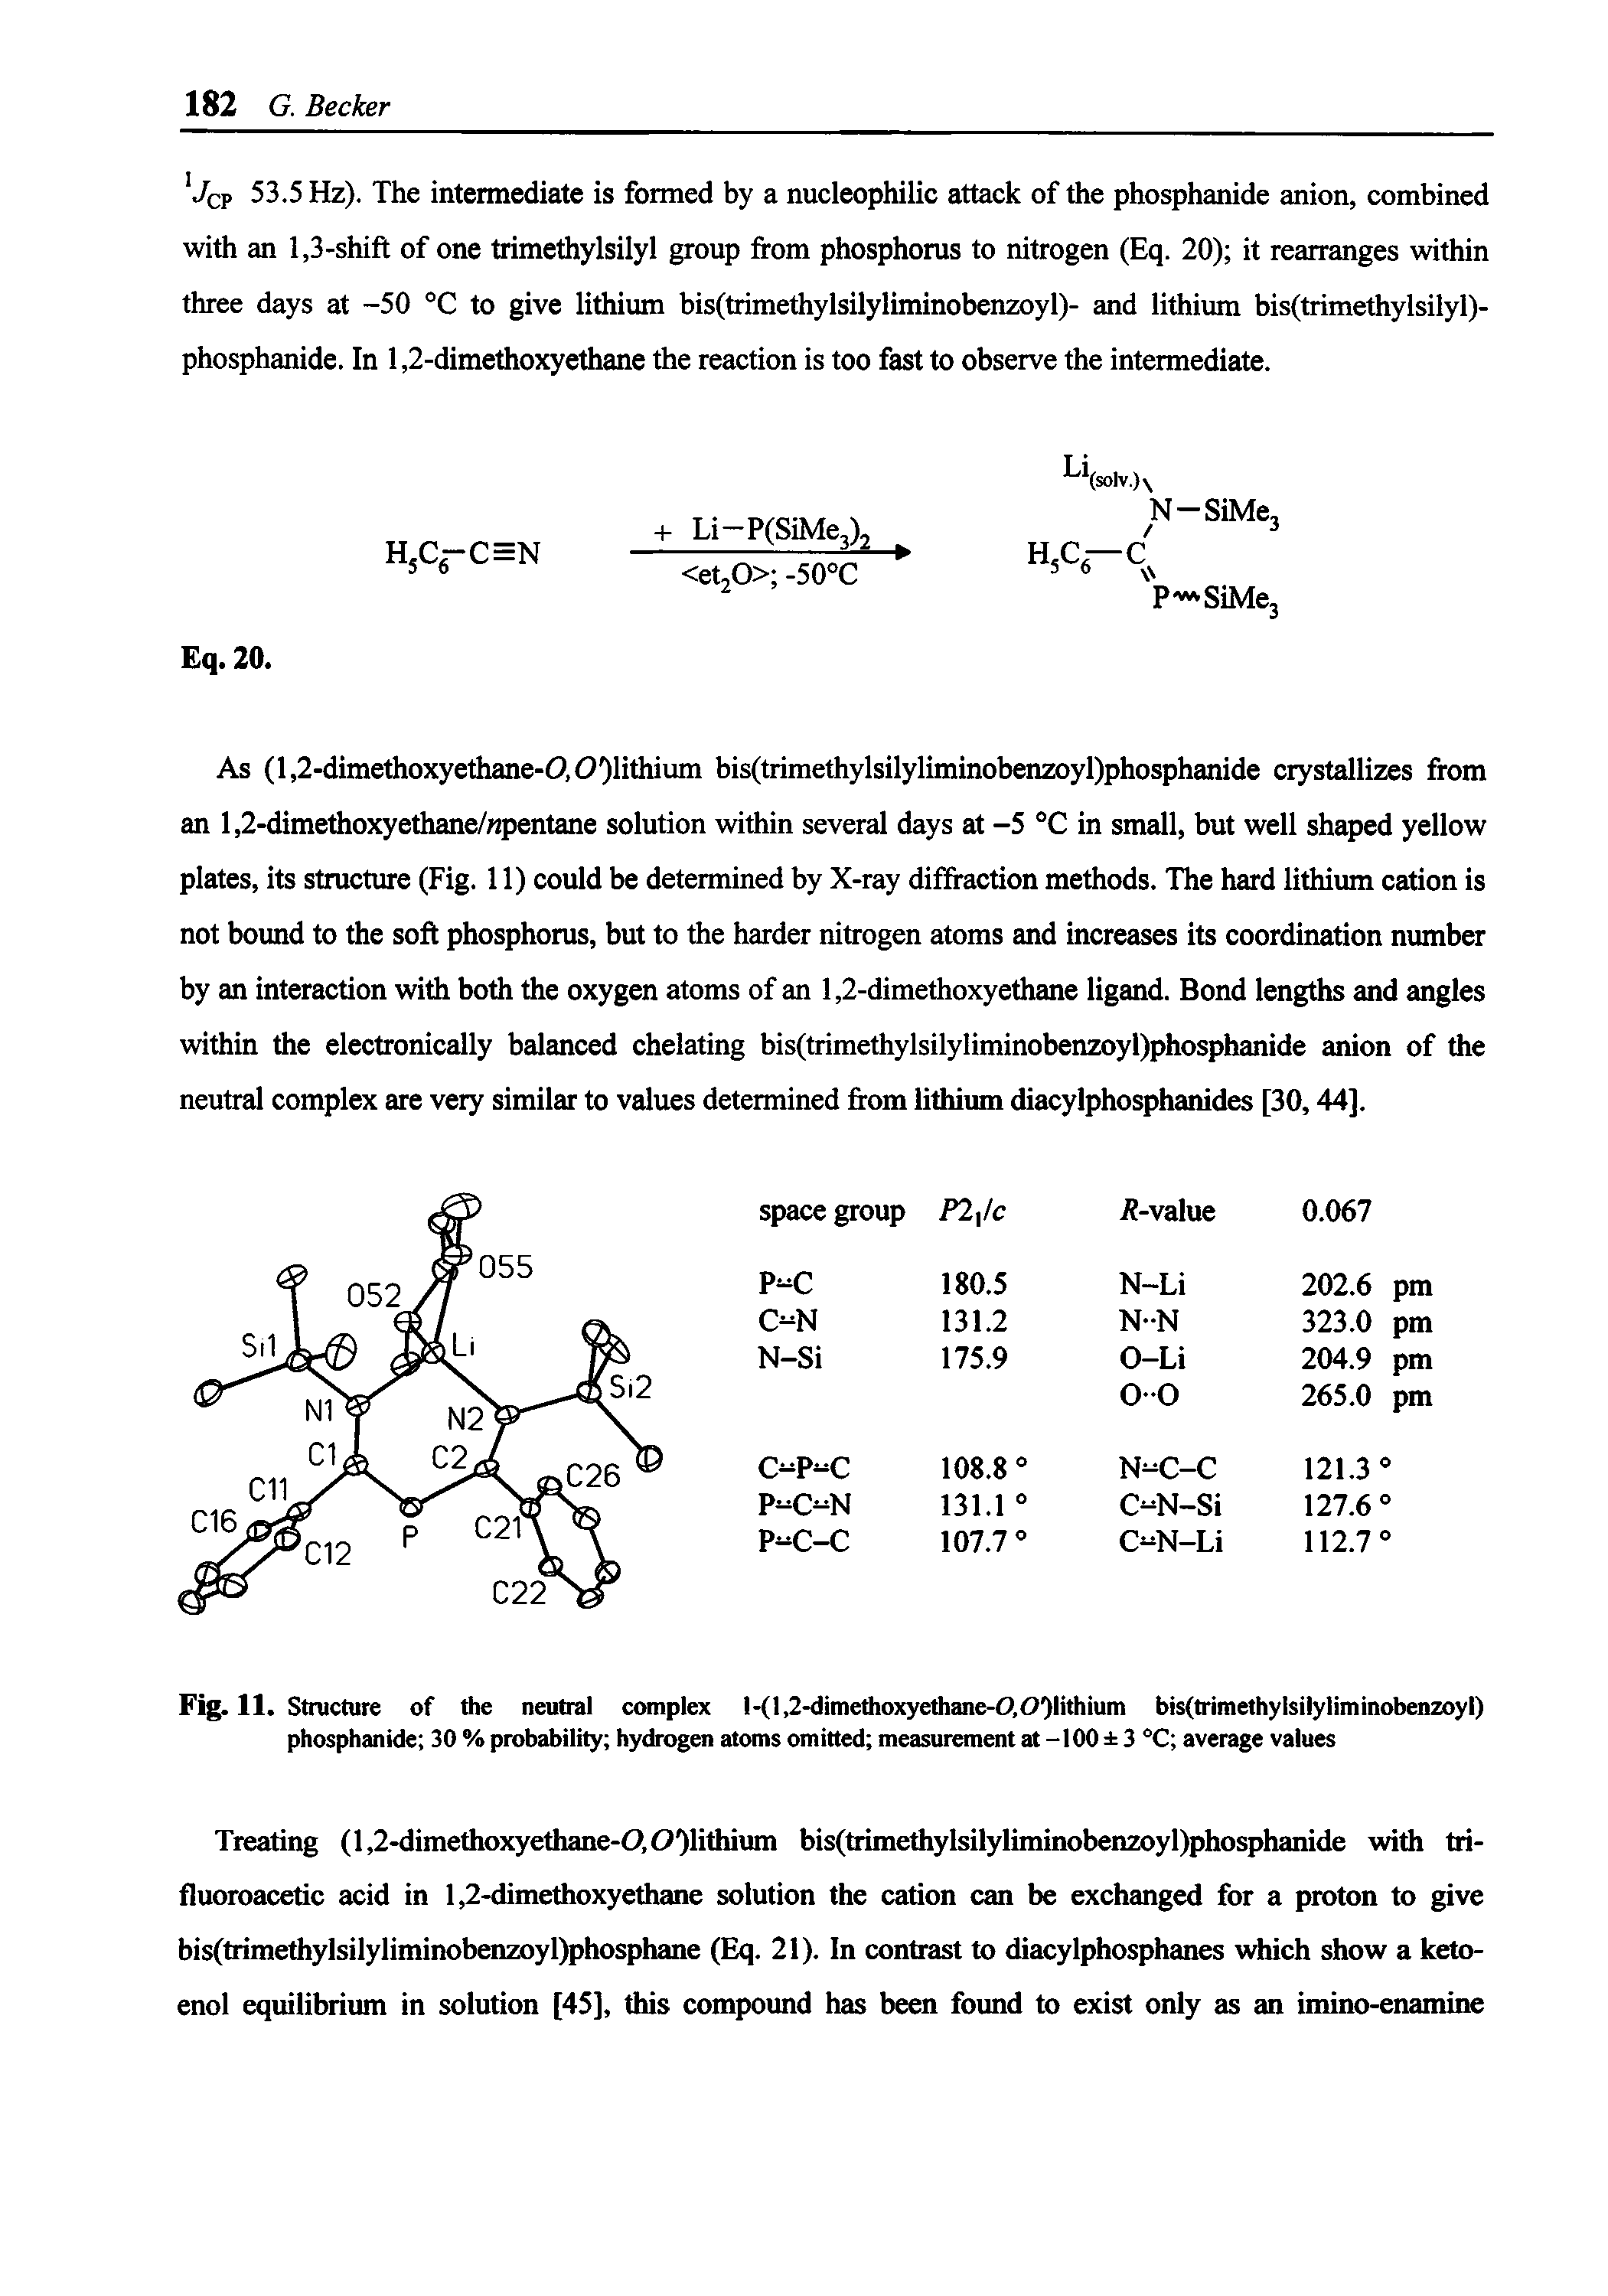 Fig. 11. Structure of the neutral complex l-(l,2-dimethoxyethane-0,0)lithium bis(trimethylsilyliminobenzoyl) phosphanide 30 % probability hydrogen atoms omitted measurement at -100 3 °C average values...